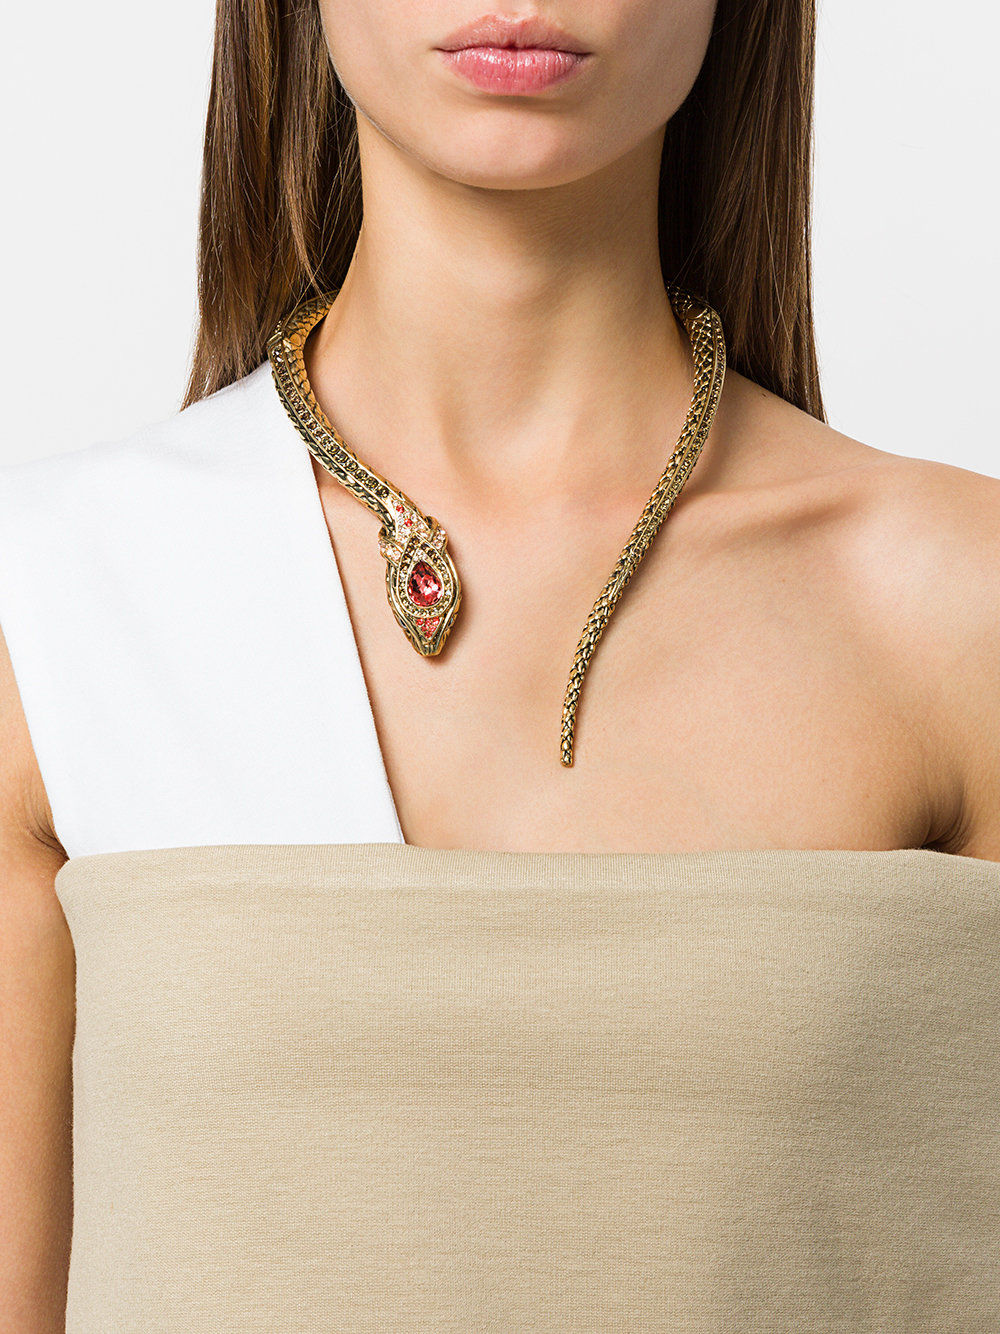 Roberto Cavalli's snake necklace